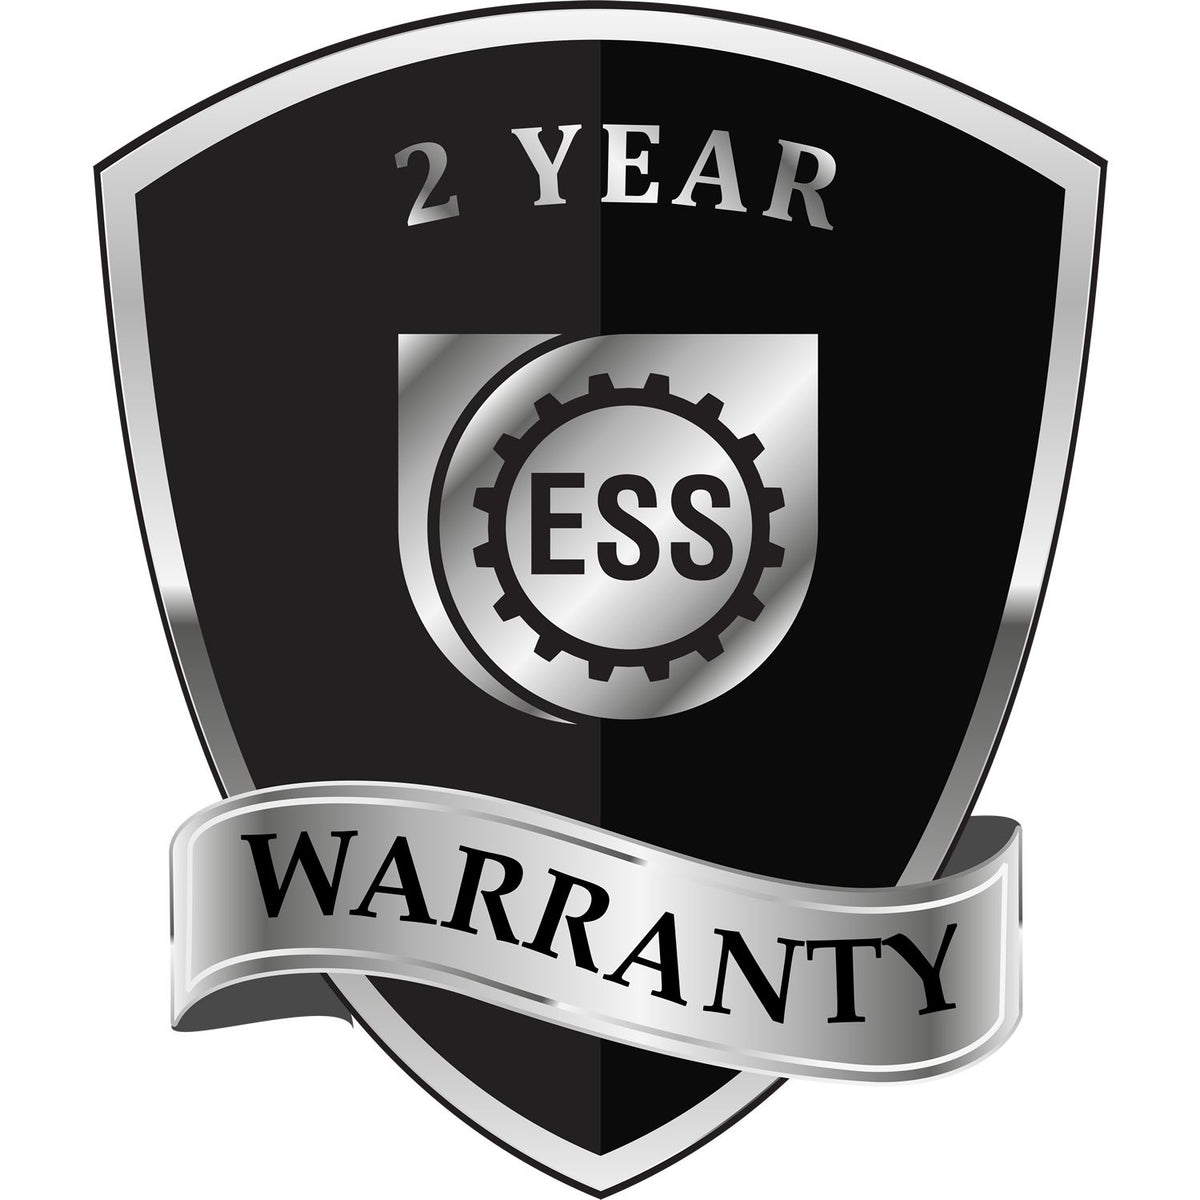 A black and silver badge or emblem showing warranty information for the Hybrid Michigan Land Surveyor Seal